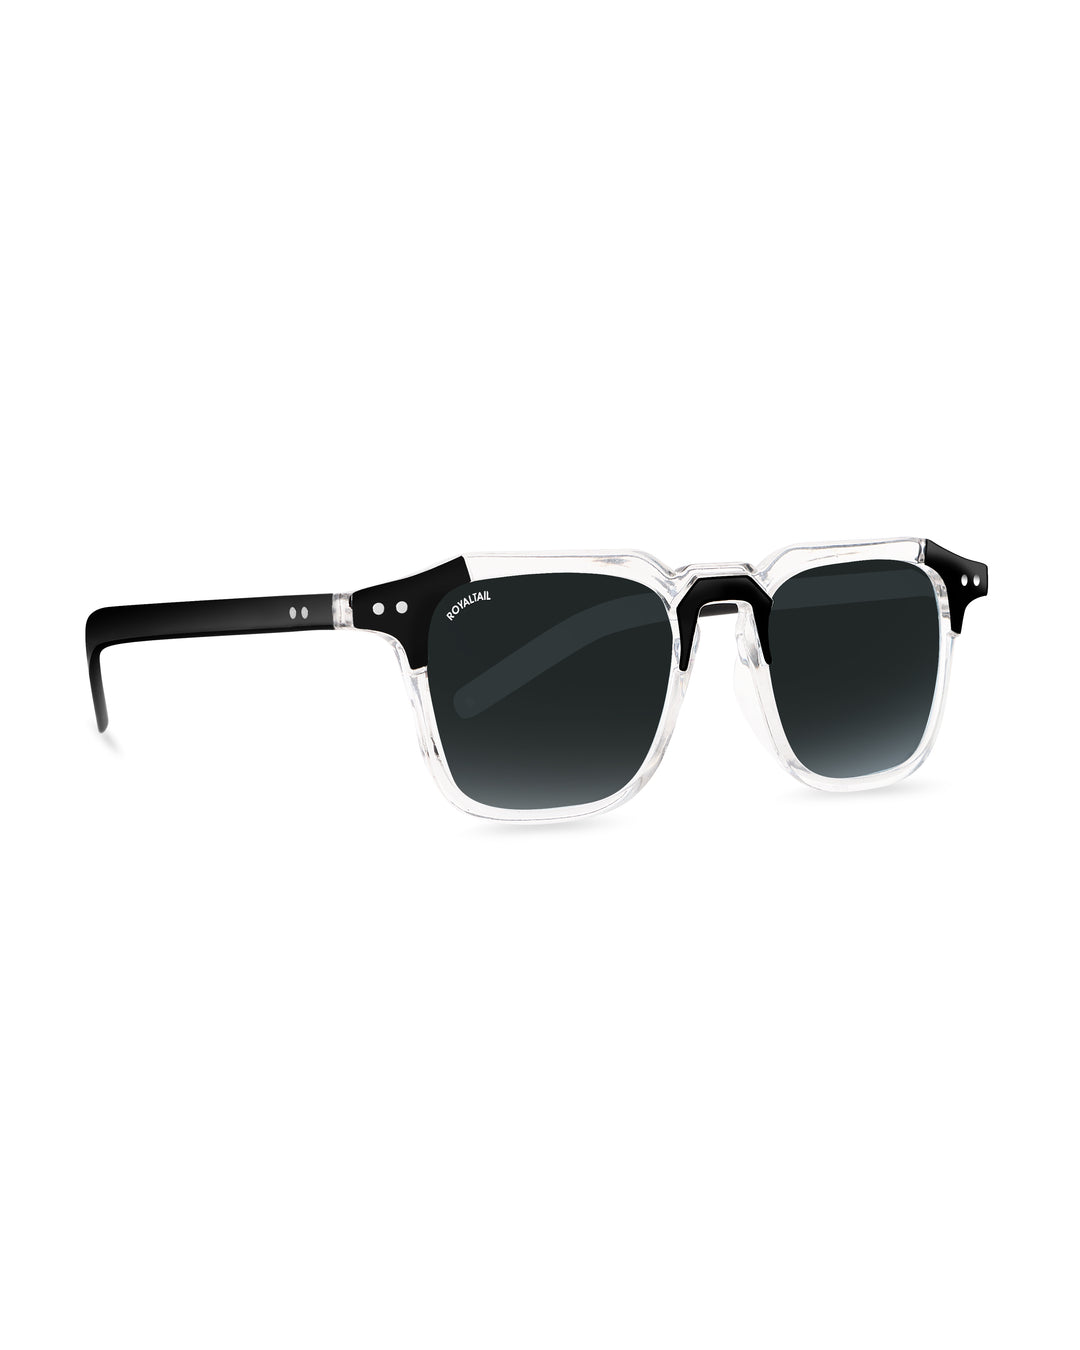 Black Glass and Black Frame Square Kingsman-01 Series Sunglasses - Royaltail